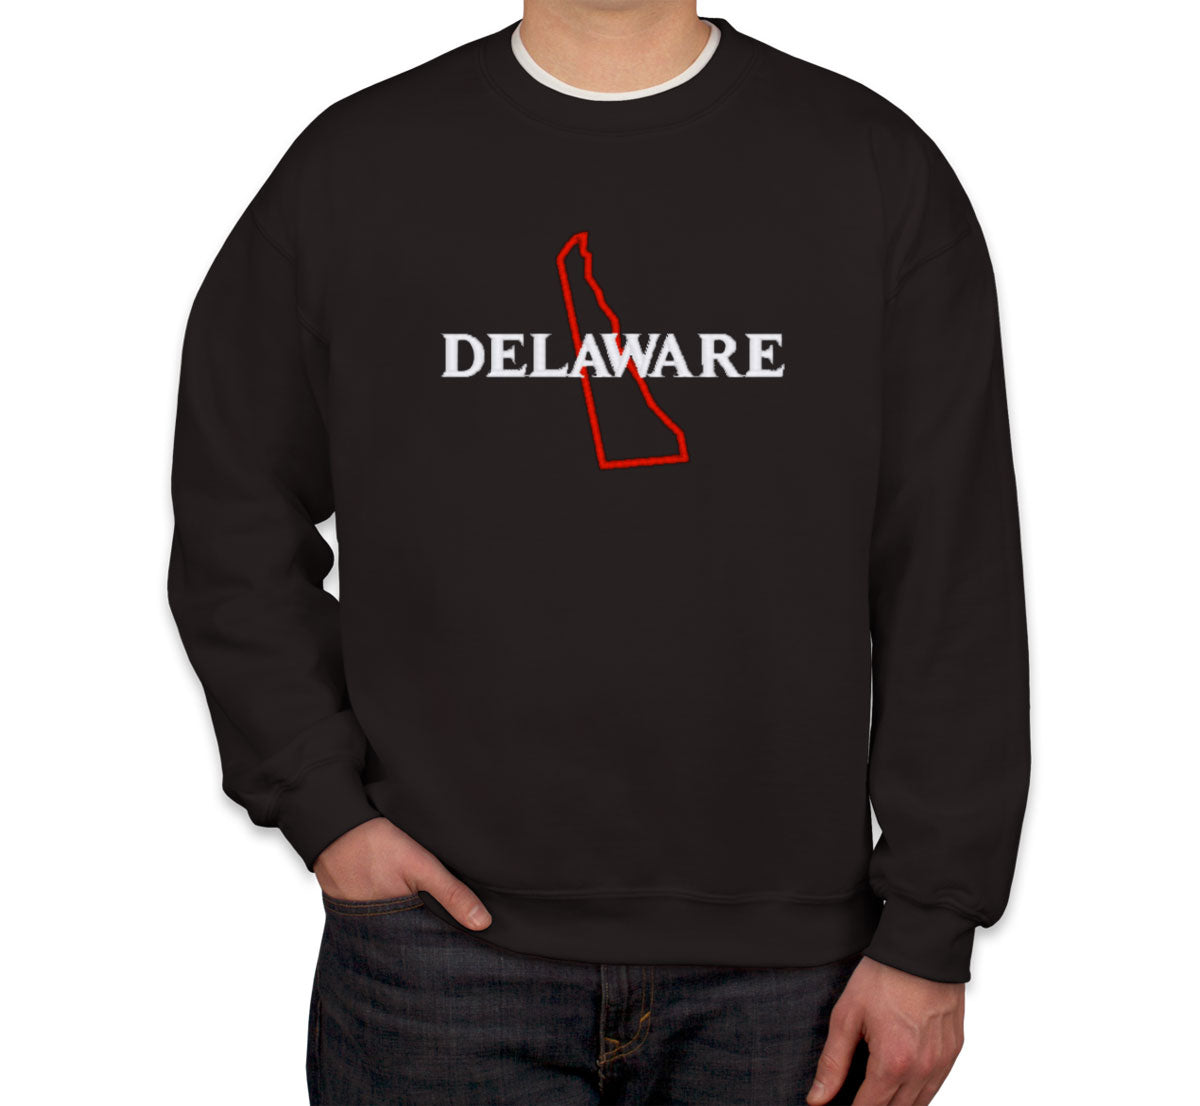 Delaware Embroidered Unisex Sweatshirt